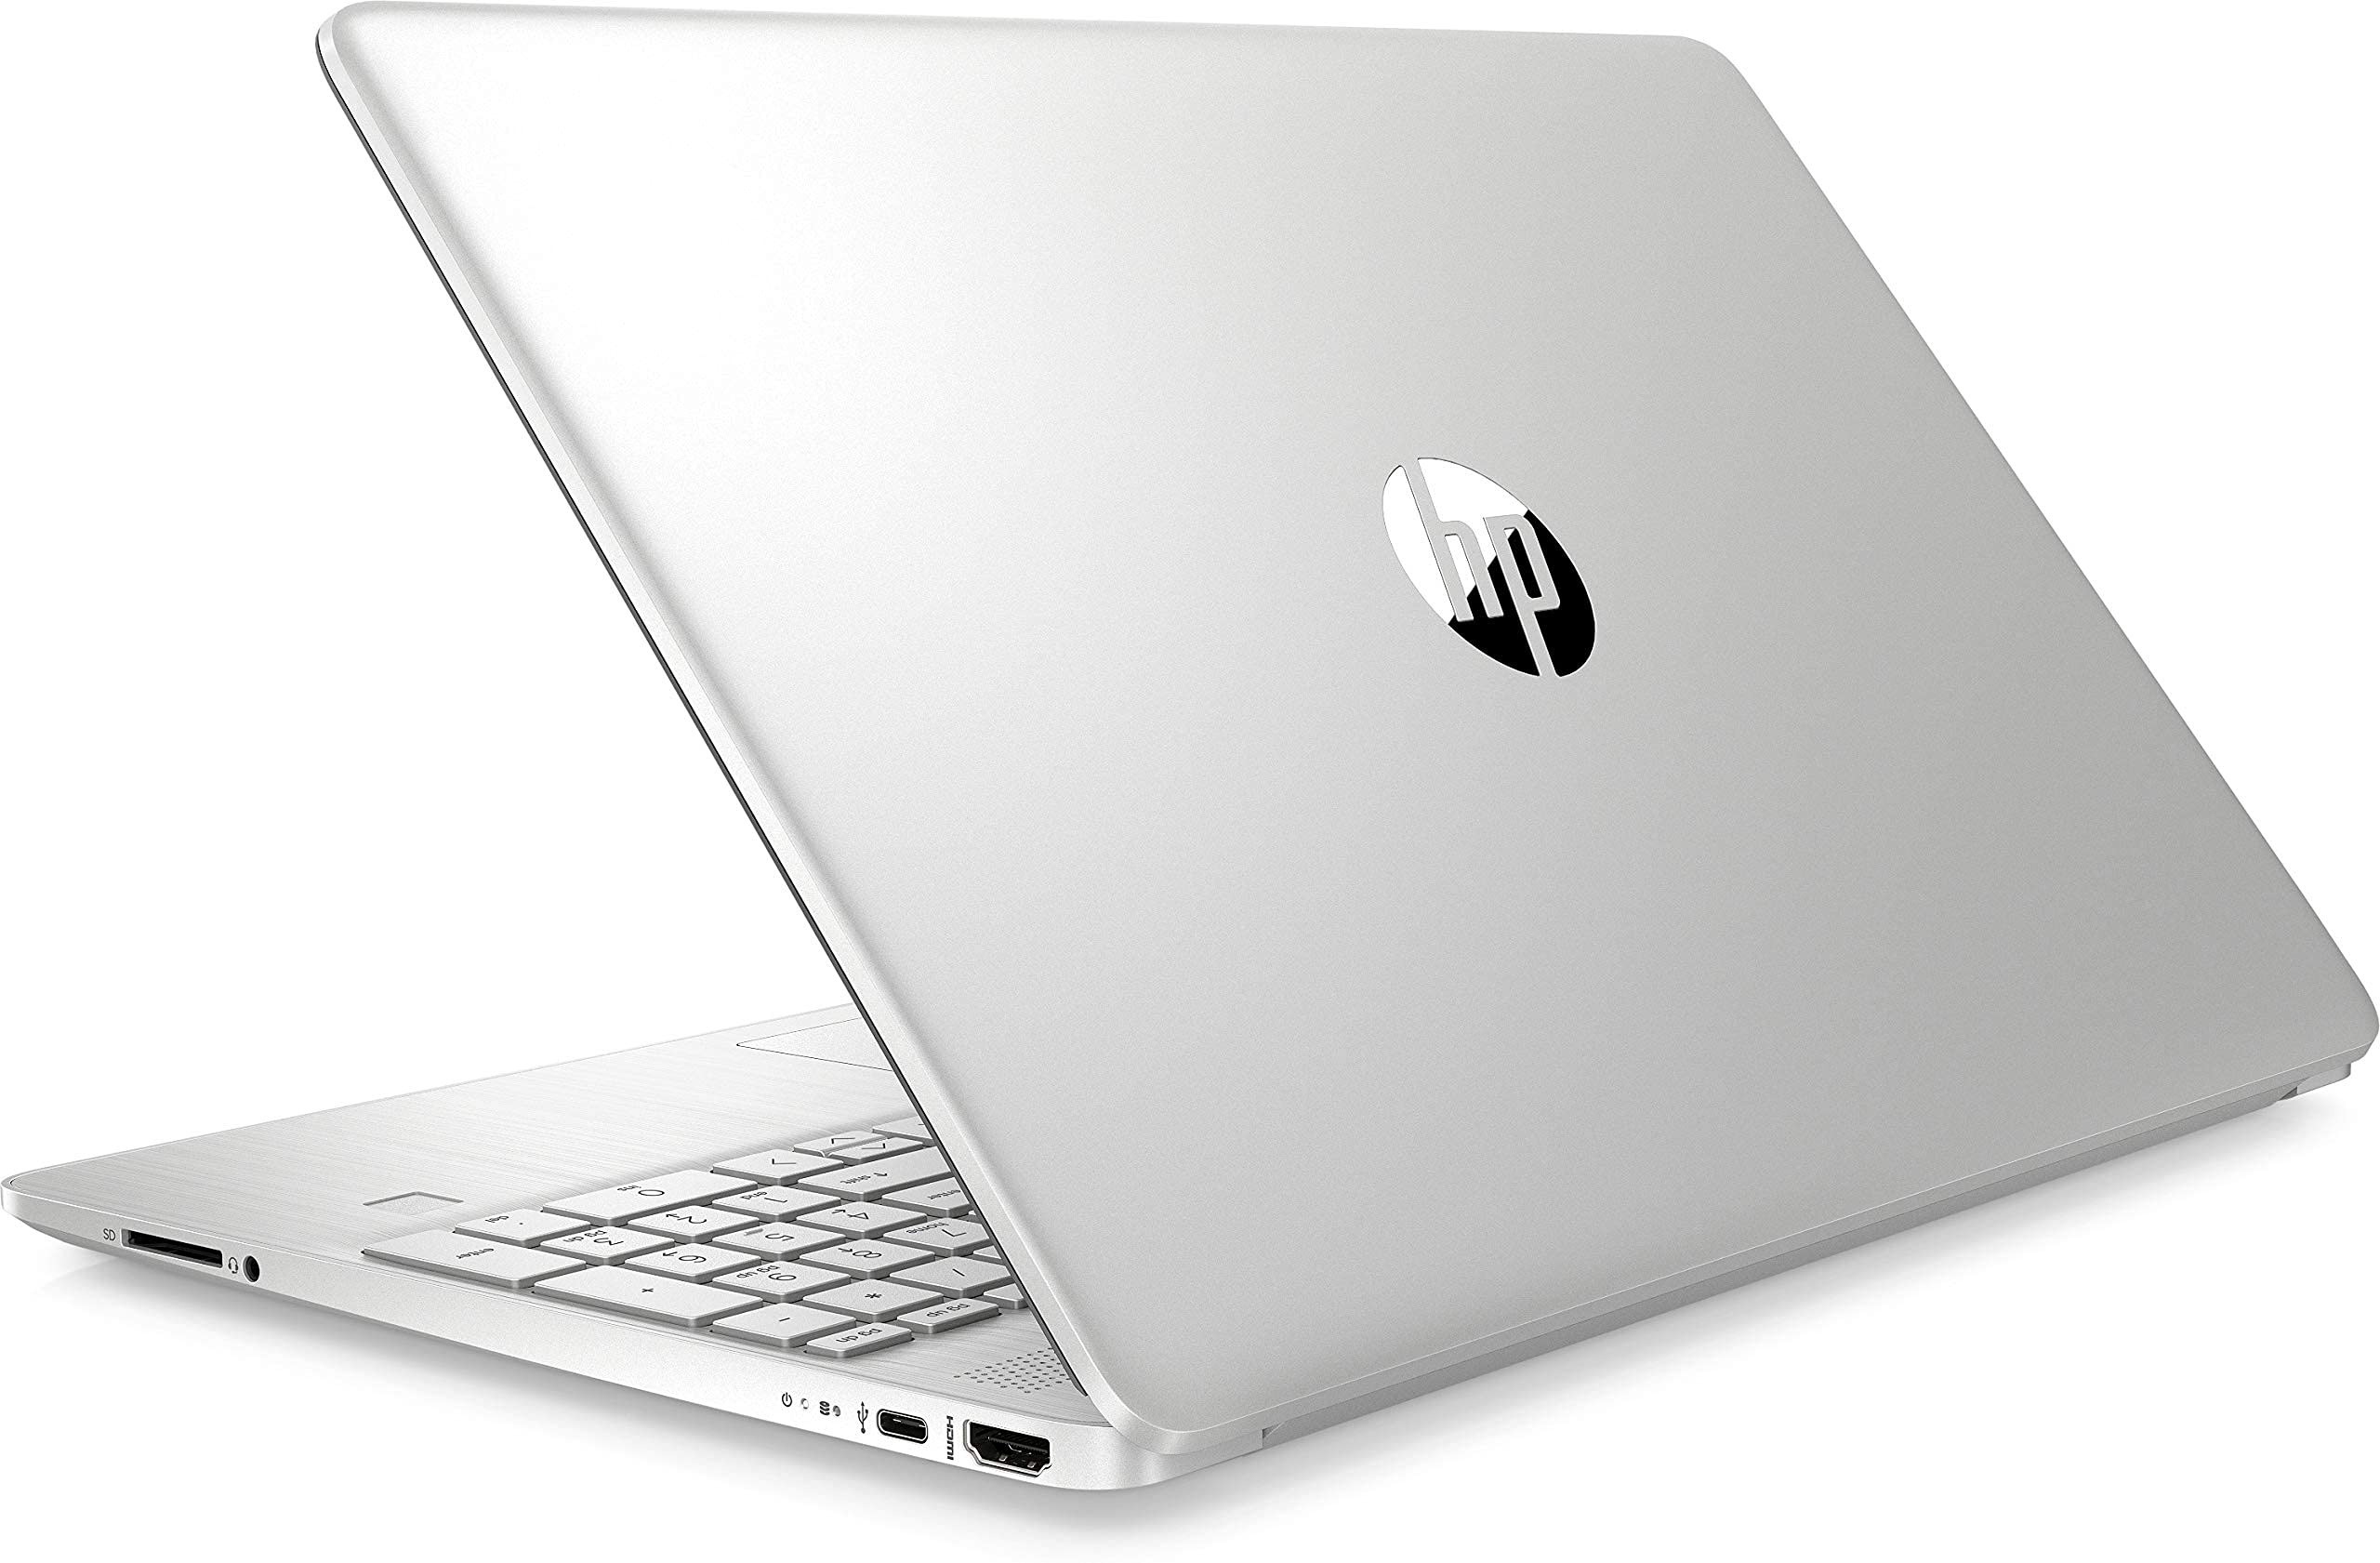 HP 15S-FQ1002NA Silver Notebook 15.6 Intel Core i5 1035G1, 8GB DDR4, 512GB Solid State Drive Wireless 11ac & Bluetooth 4.2, HD Webcam, Windows 10 Pro - UK Keyboard Layout - Non HP Plain Box (Renewed)